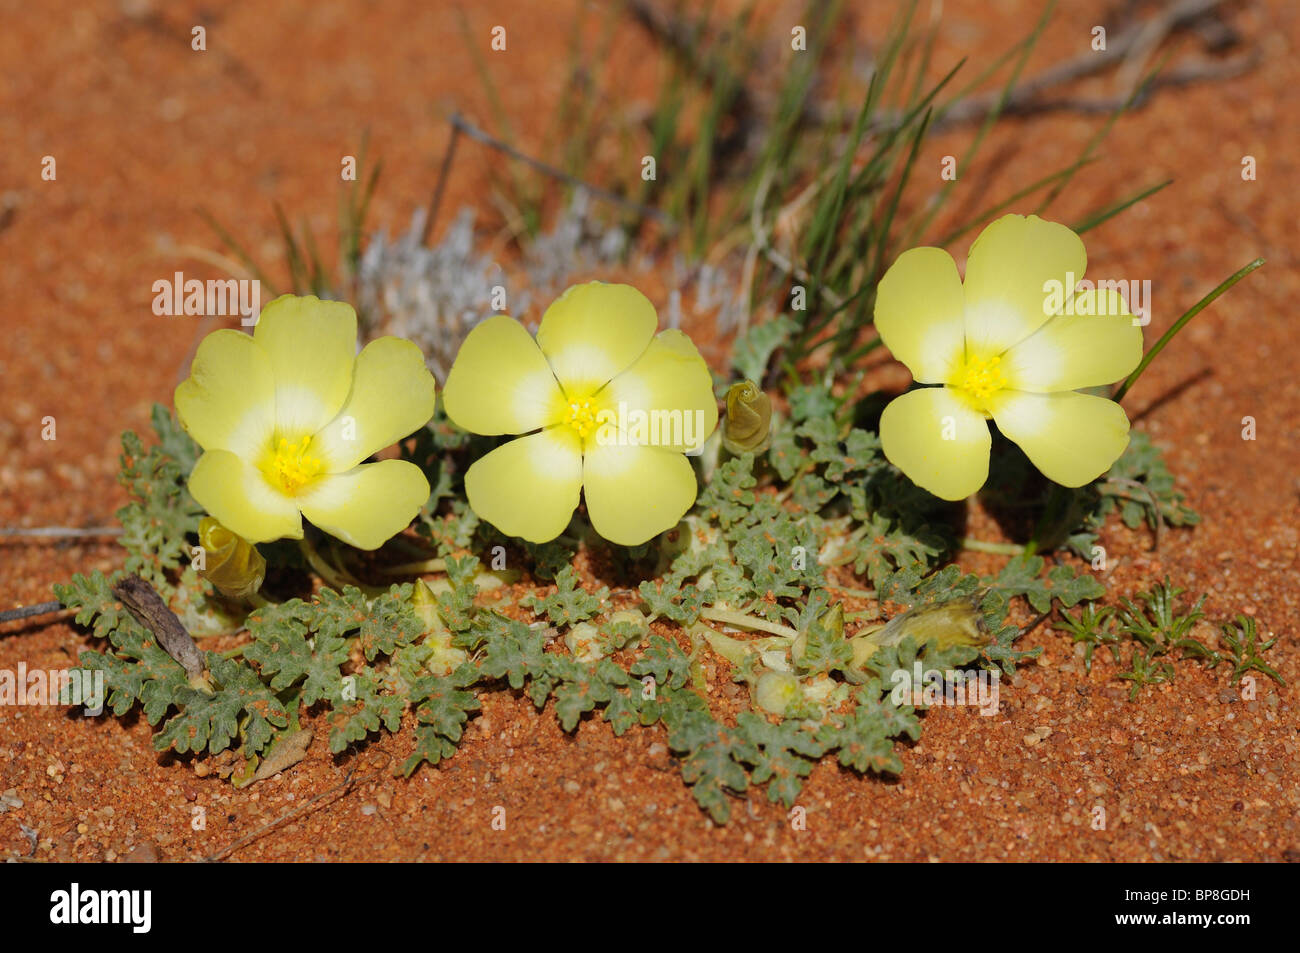 Grielum humifusum, pietsnot, Namaqualand, South Africa Stock Photo